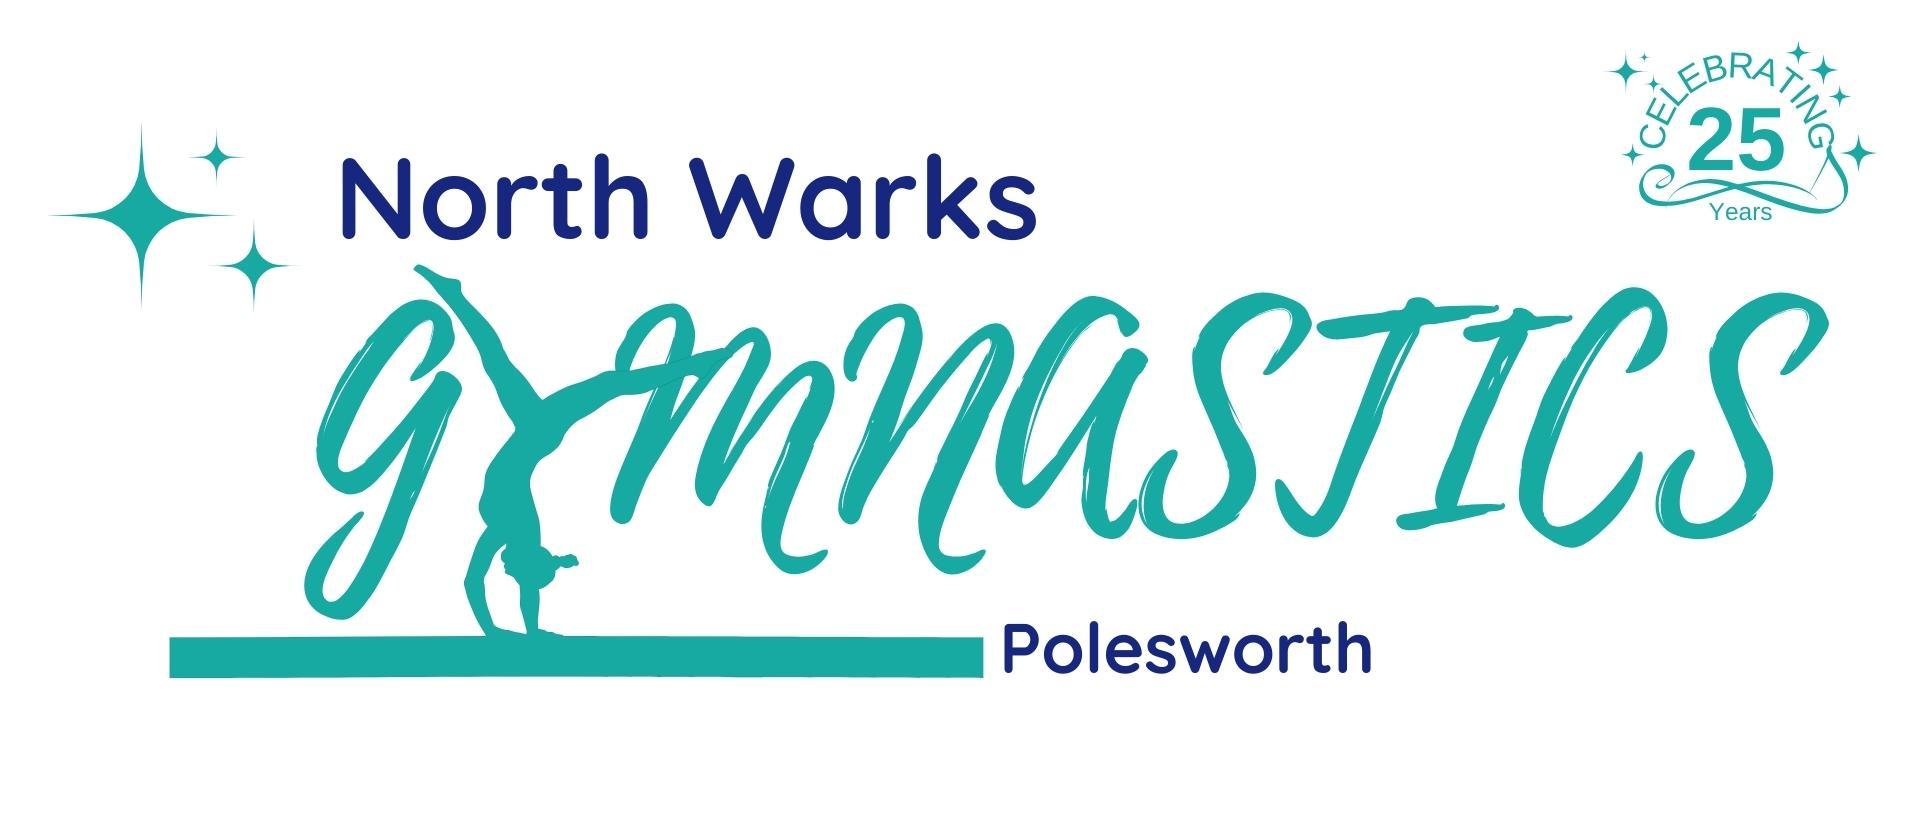 North Warks gymnastics Polesworth